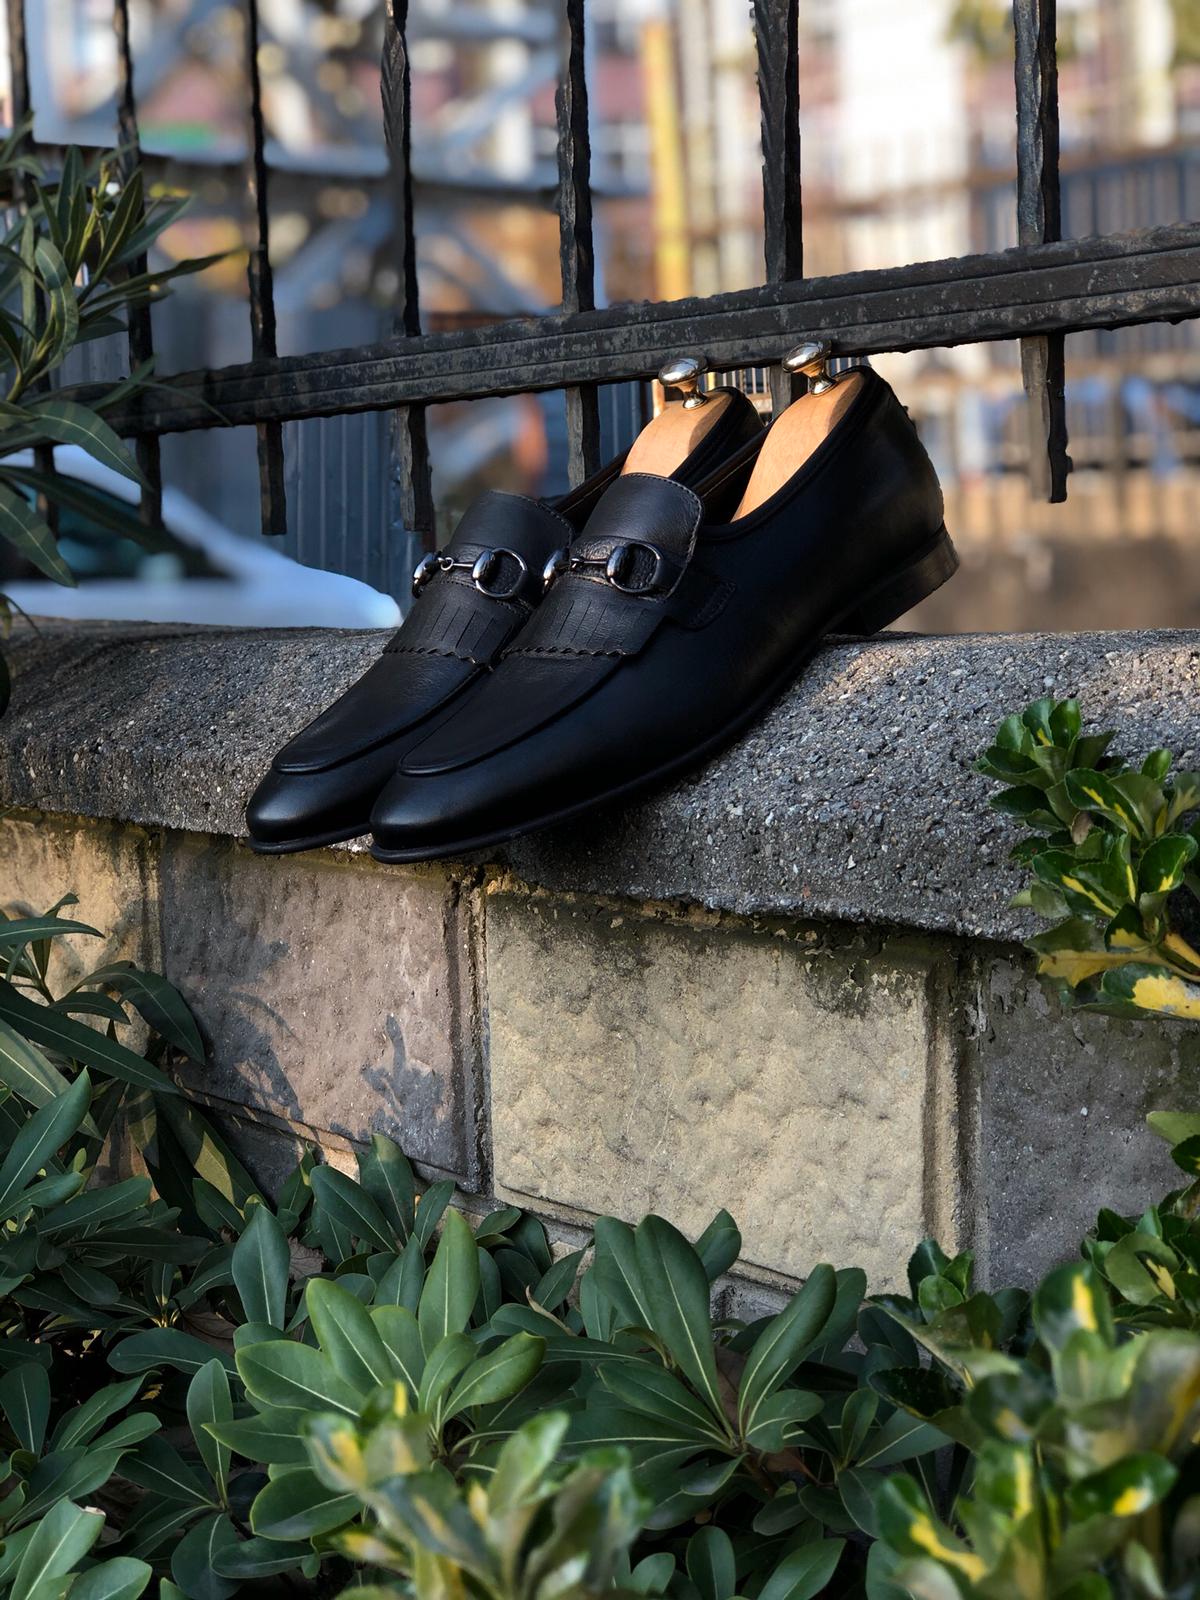 Buckle Detail with Classic Leather Shoes Black-baagr.myshopify.com-shoes2-BOJONI